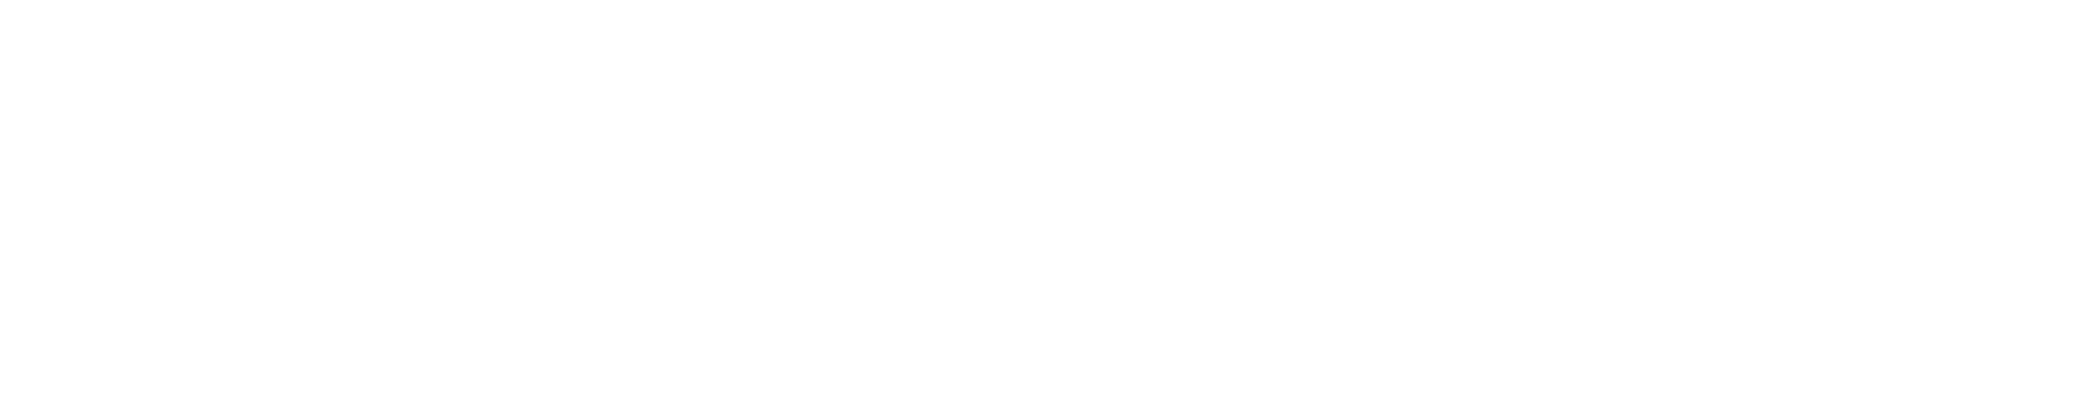 wealth insider logo